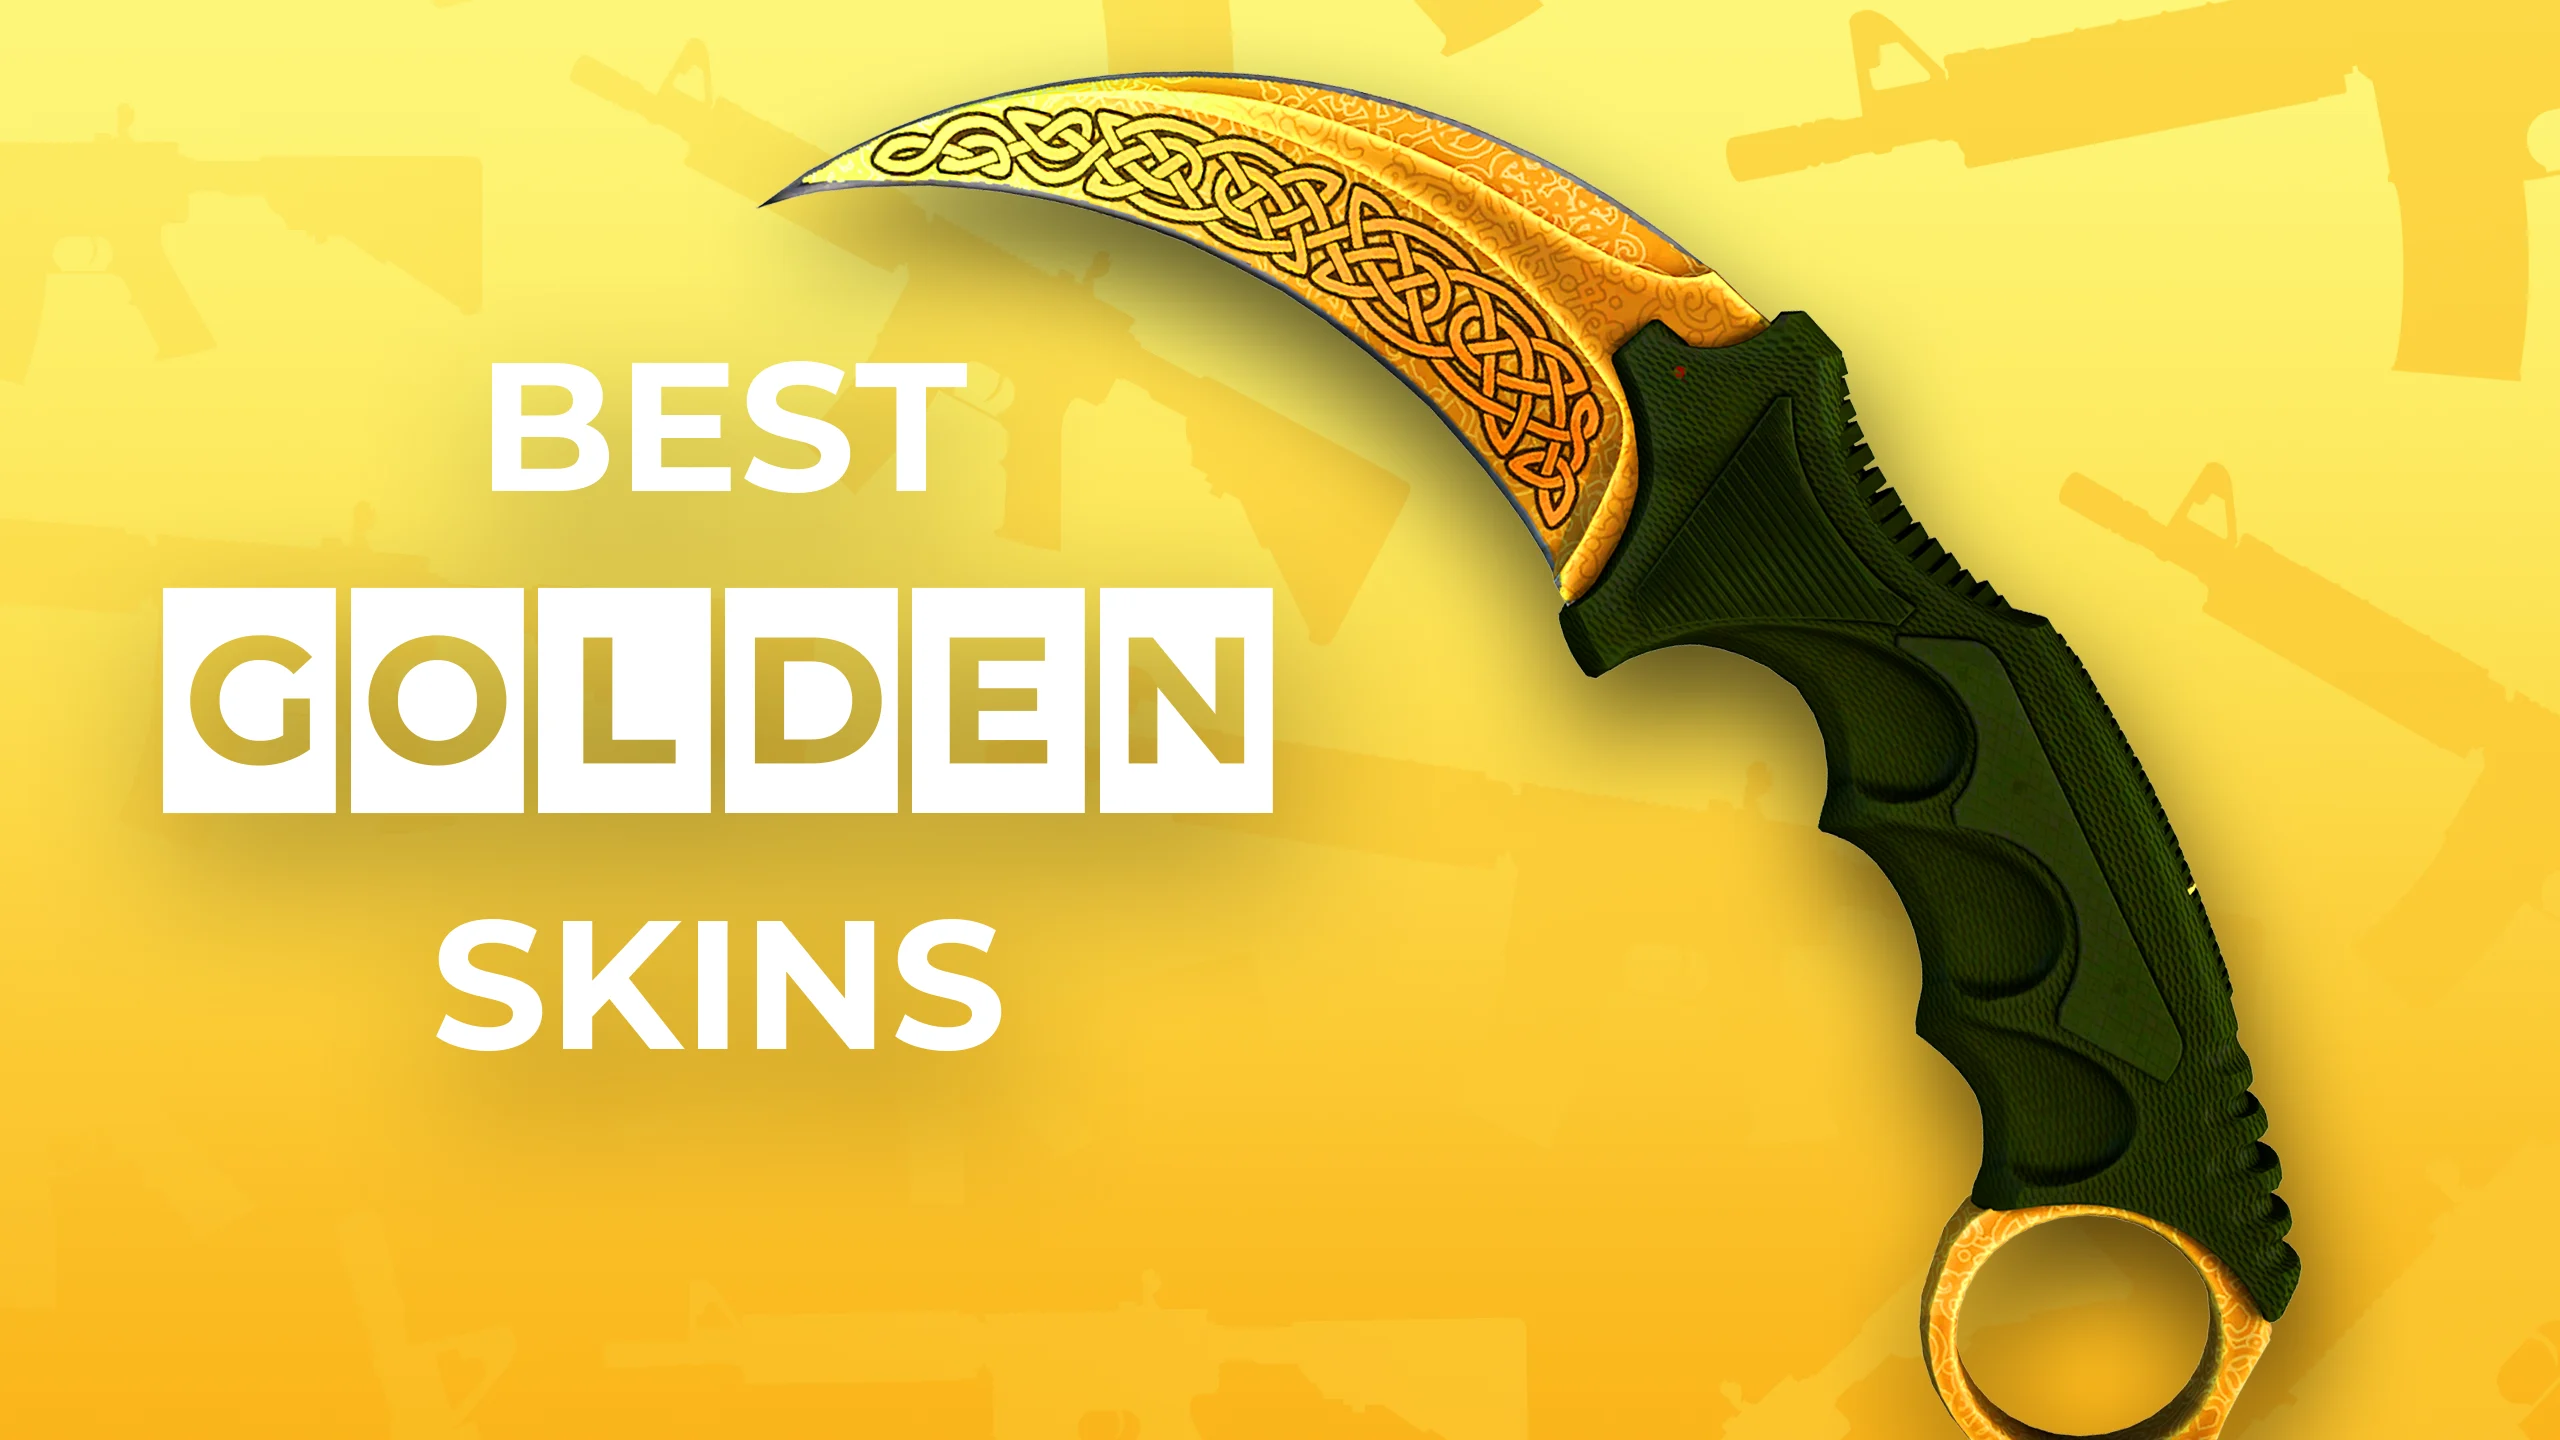 Best Golden CS:GO Skins